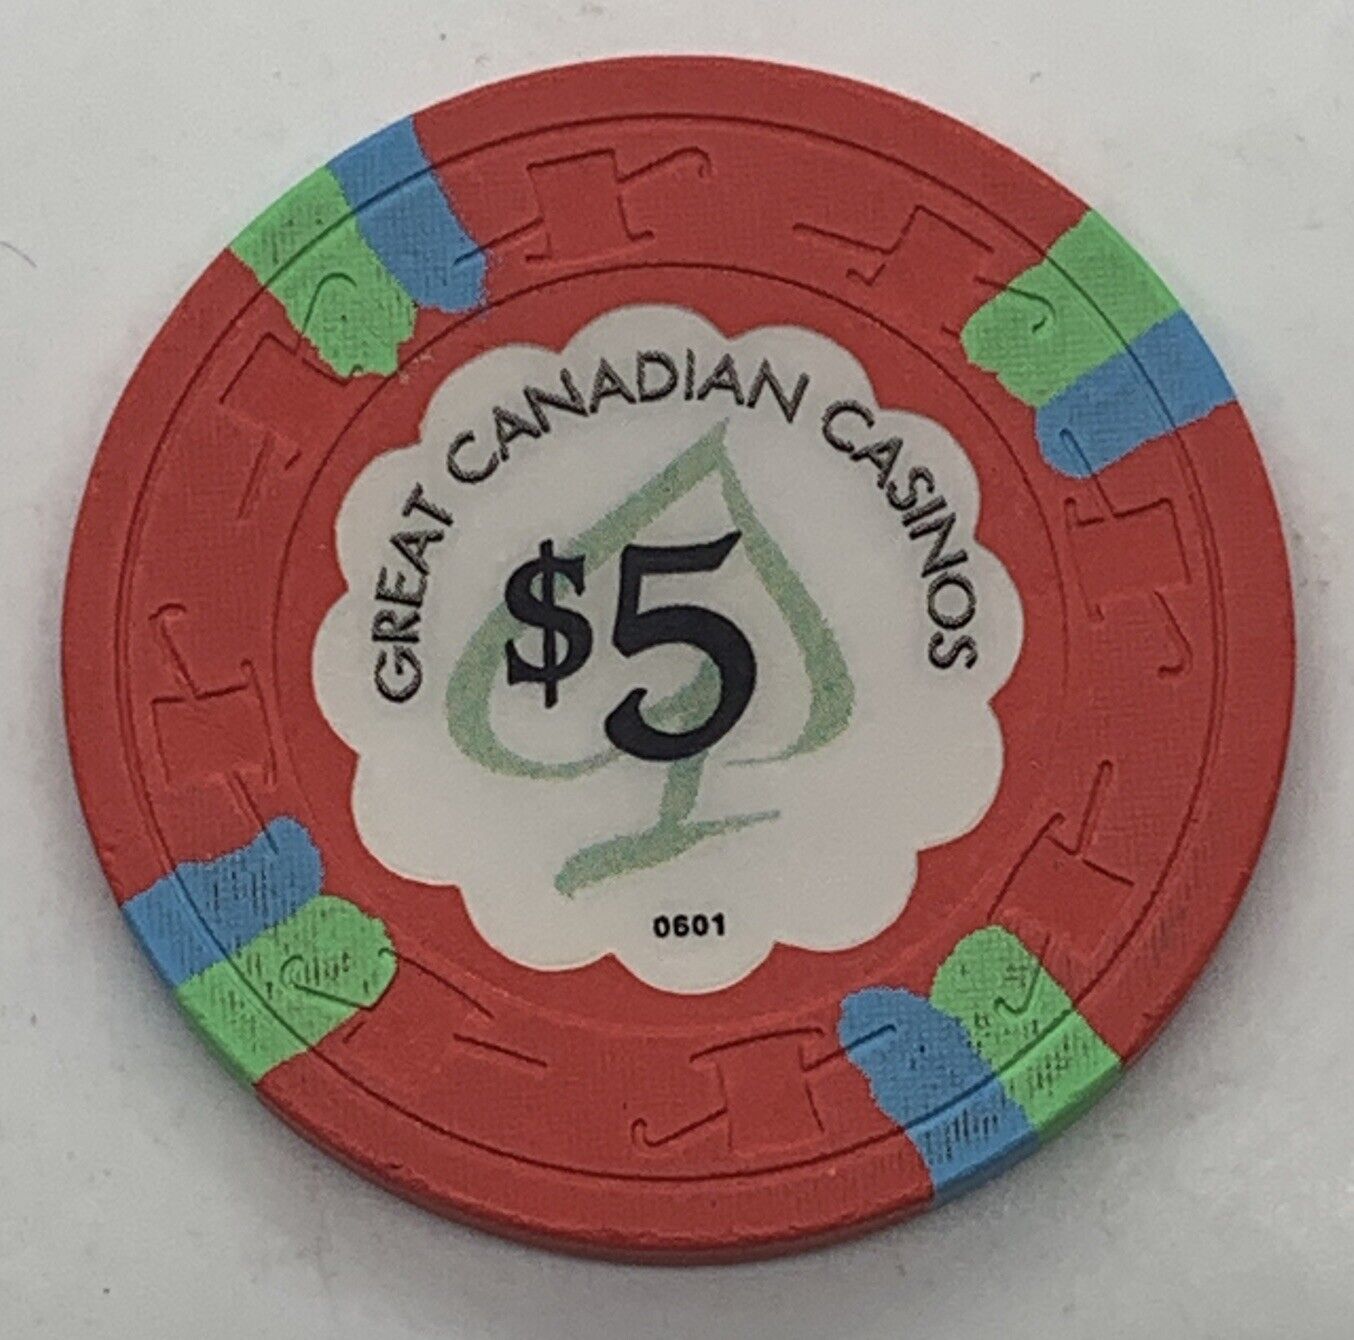 Great Canadian Casino $5 Chip Richmond British Columbia Canada H&C LCV 2001